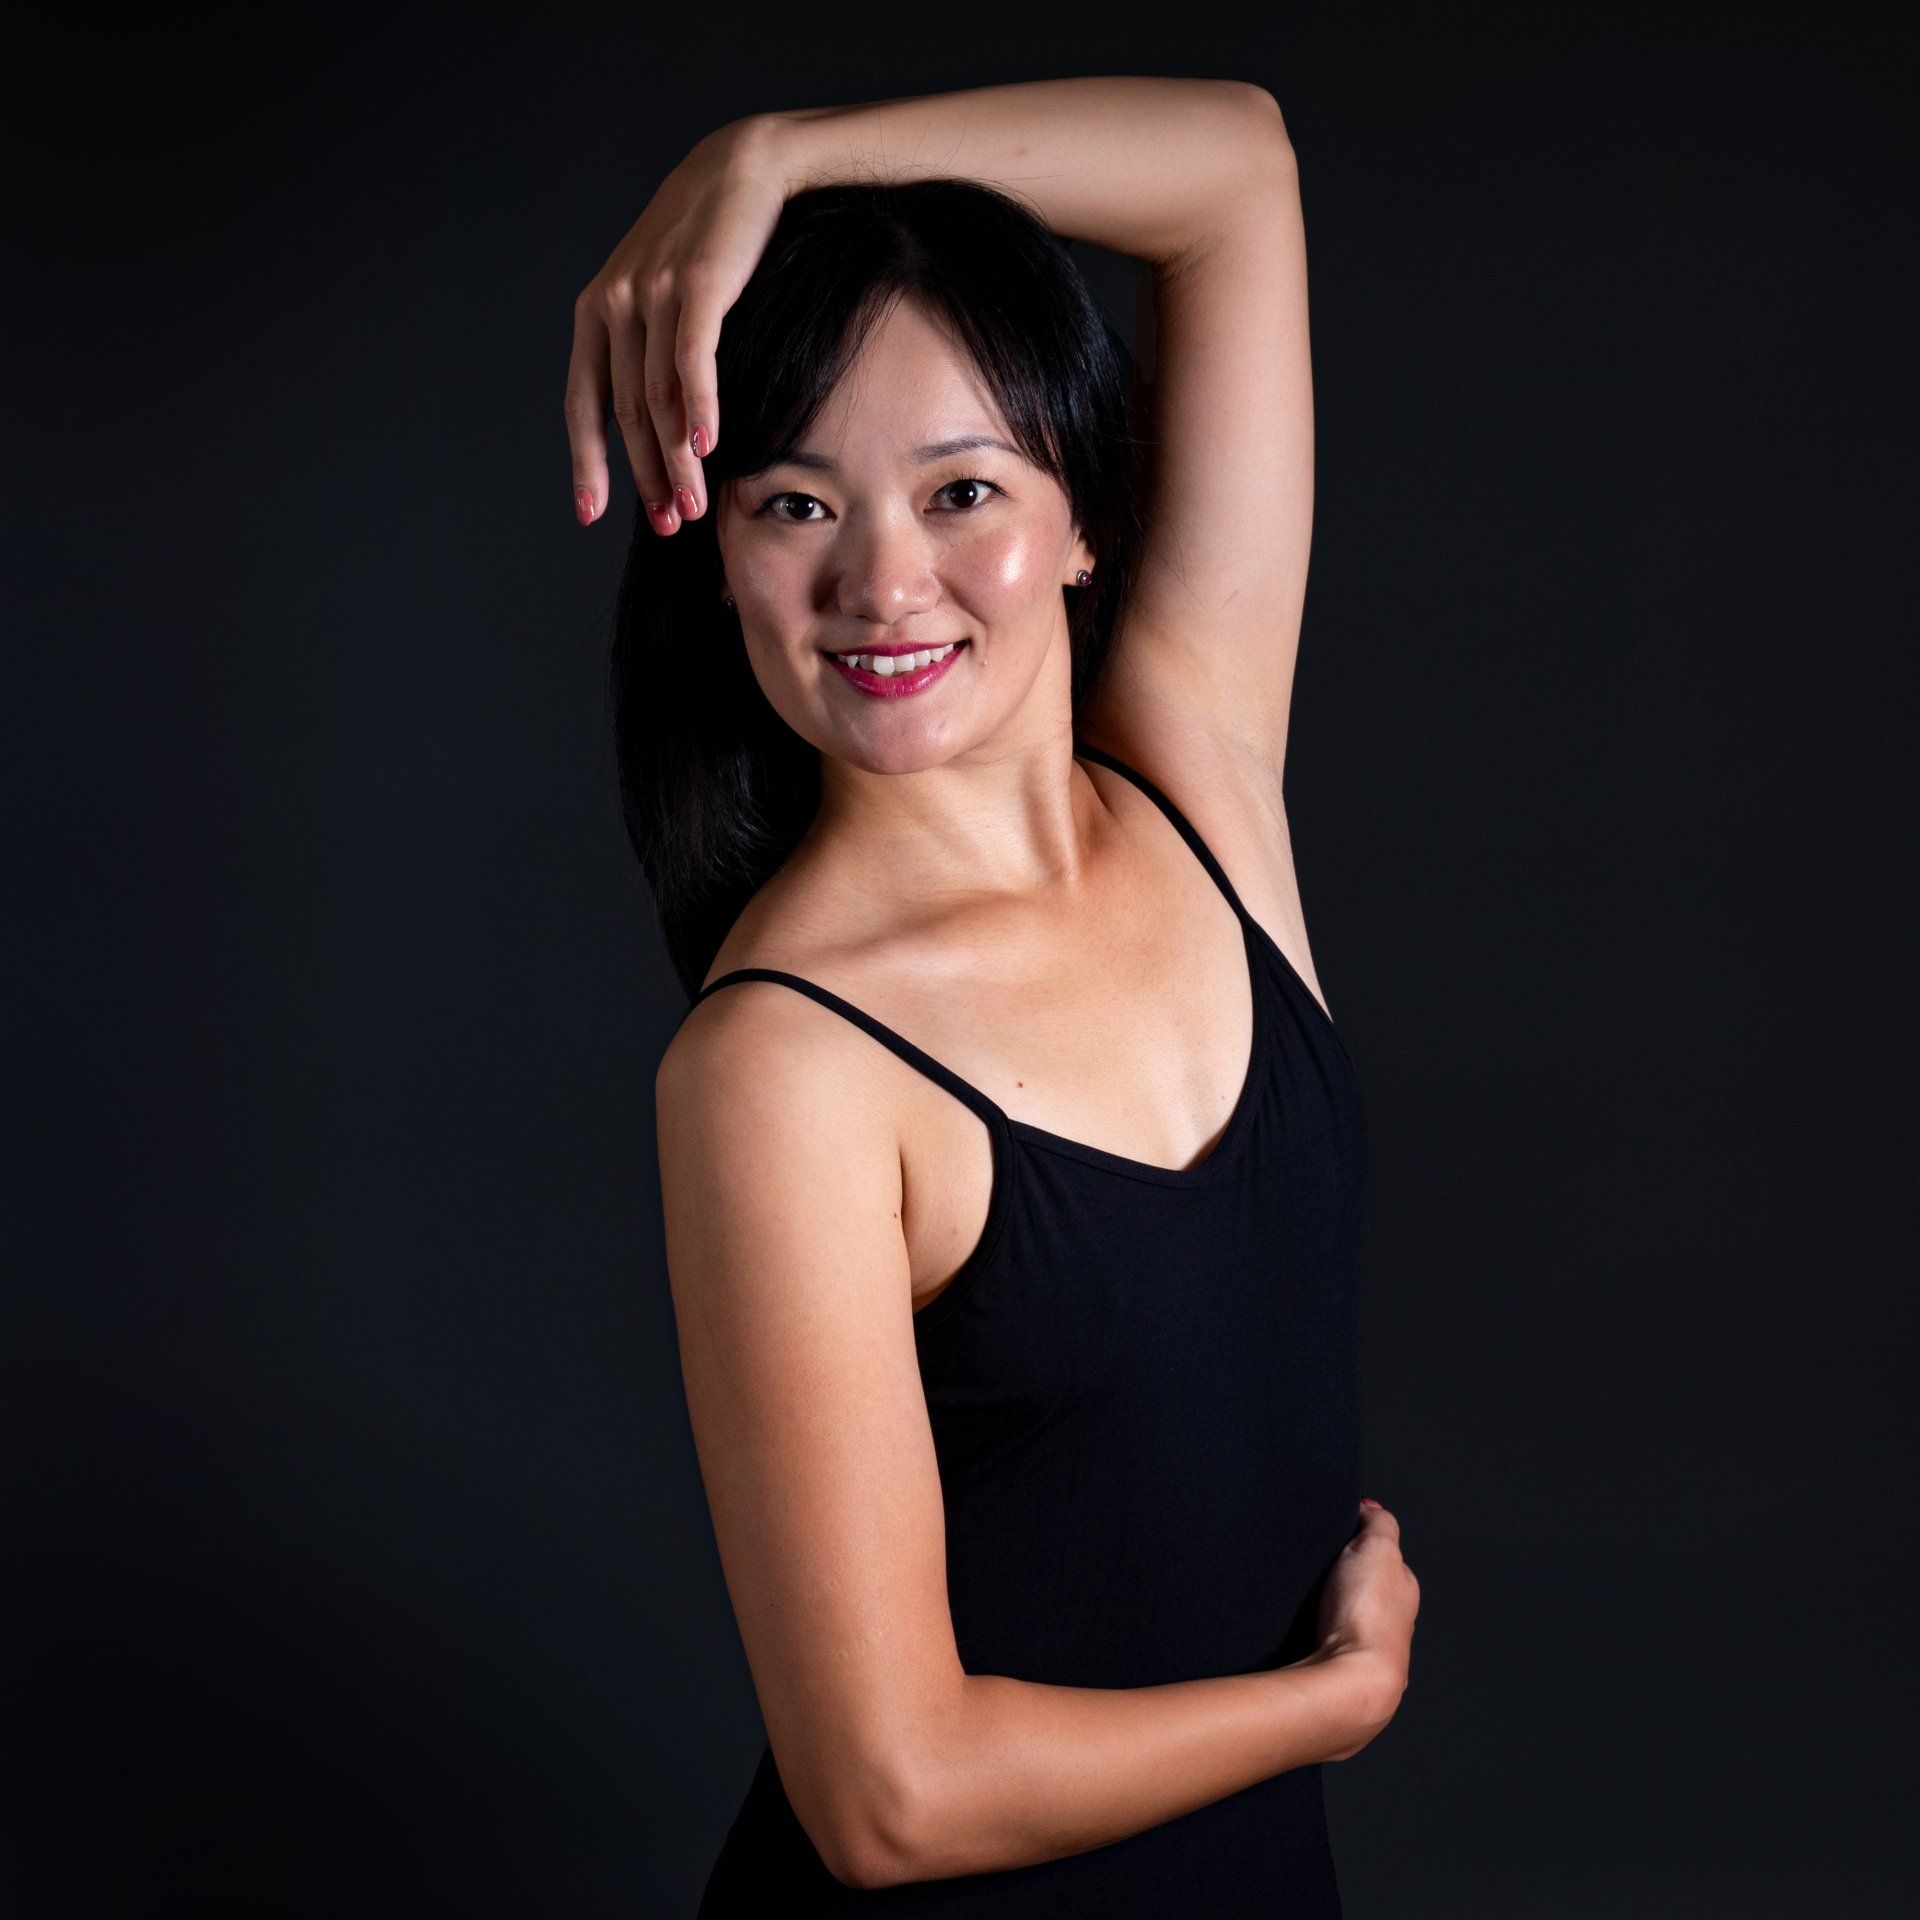 Rina Yamaguchi, Ballet dancer at Atlantic City Ballet from Japan